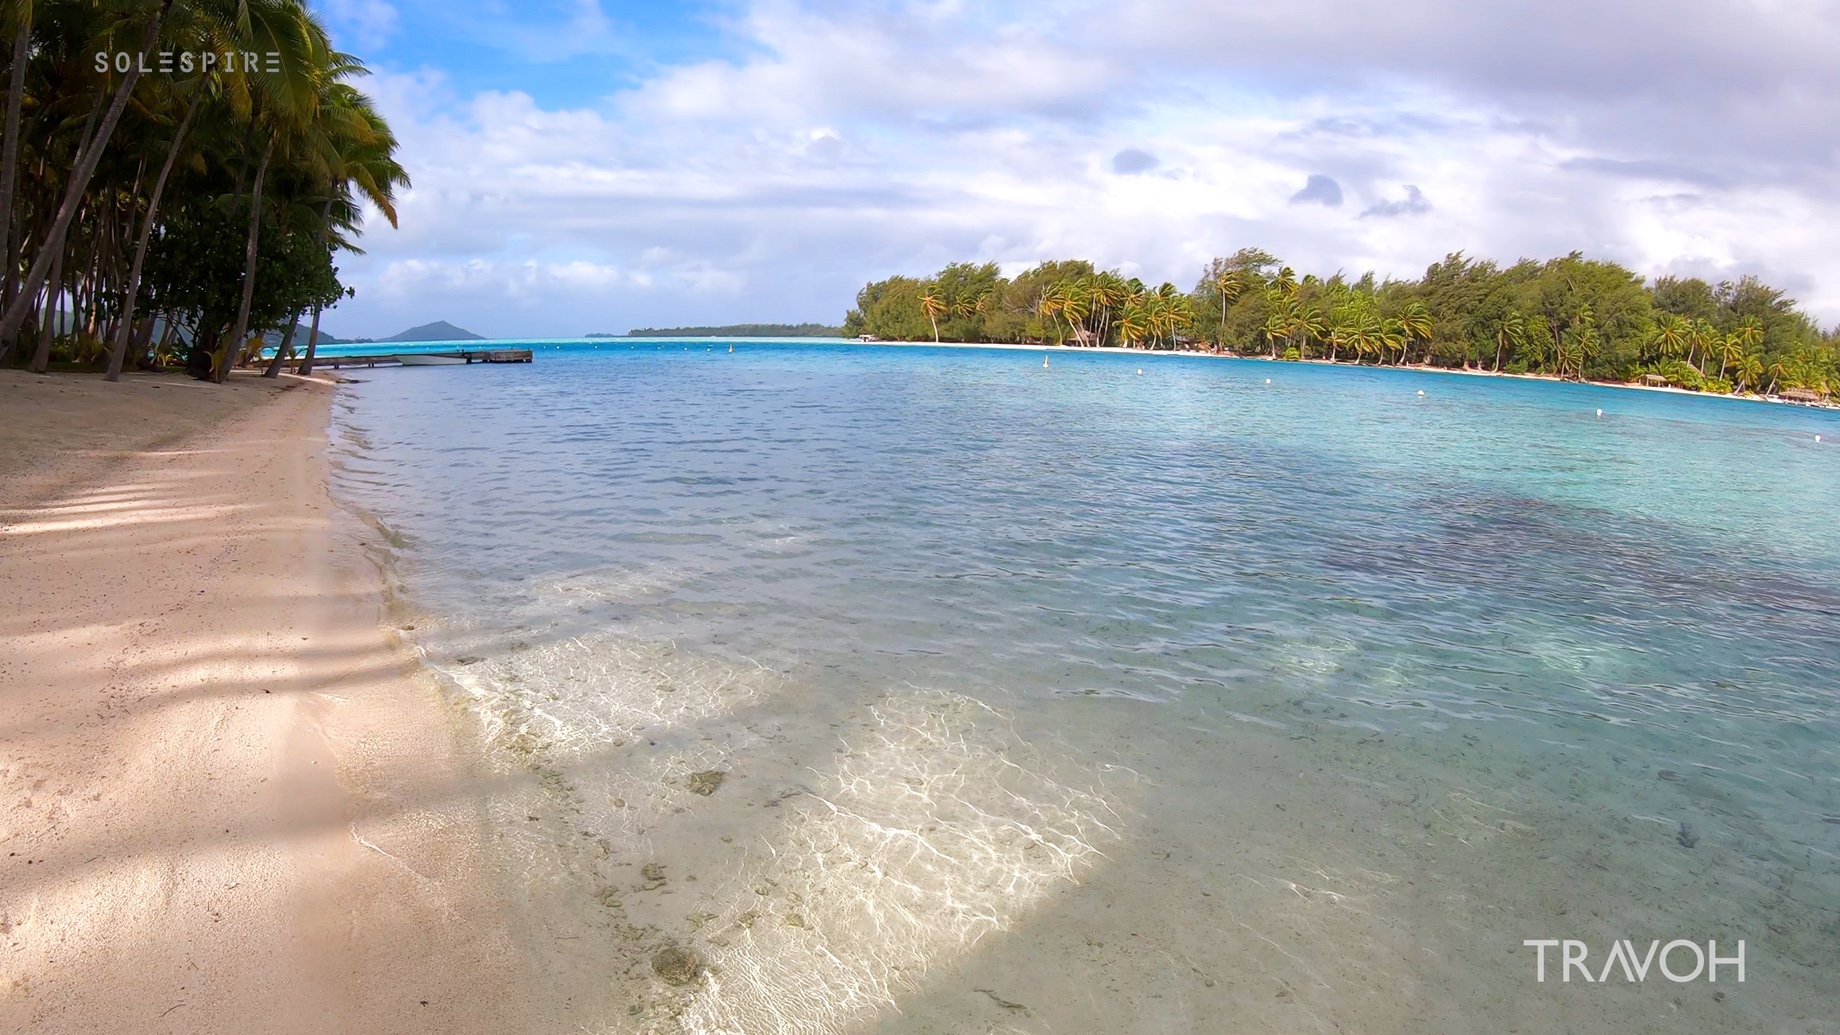 Peaceful Morning, Calm Sea, Palm Trees - Motu Tane Island, Bora Bora, French Polynesia - 4K Travel Video